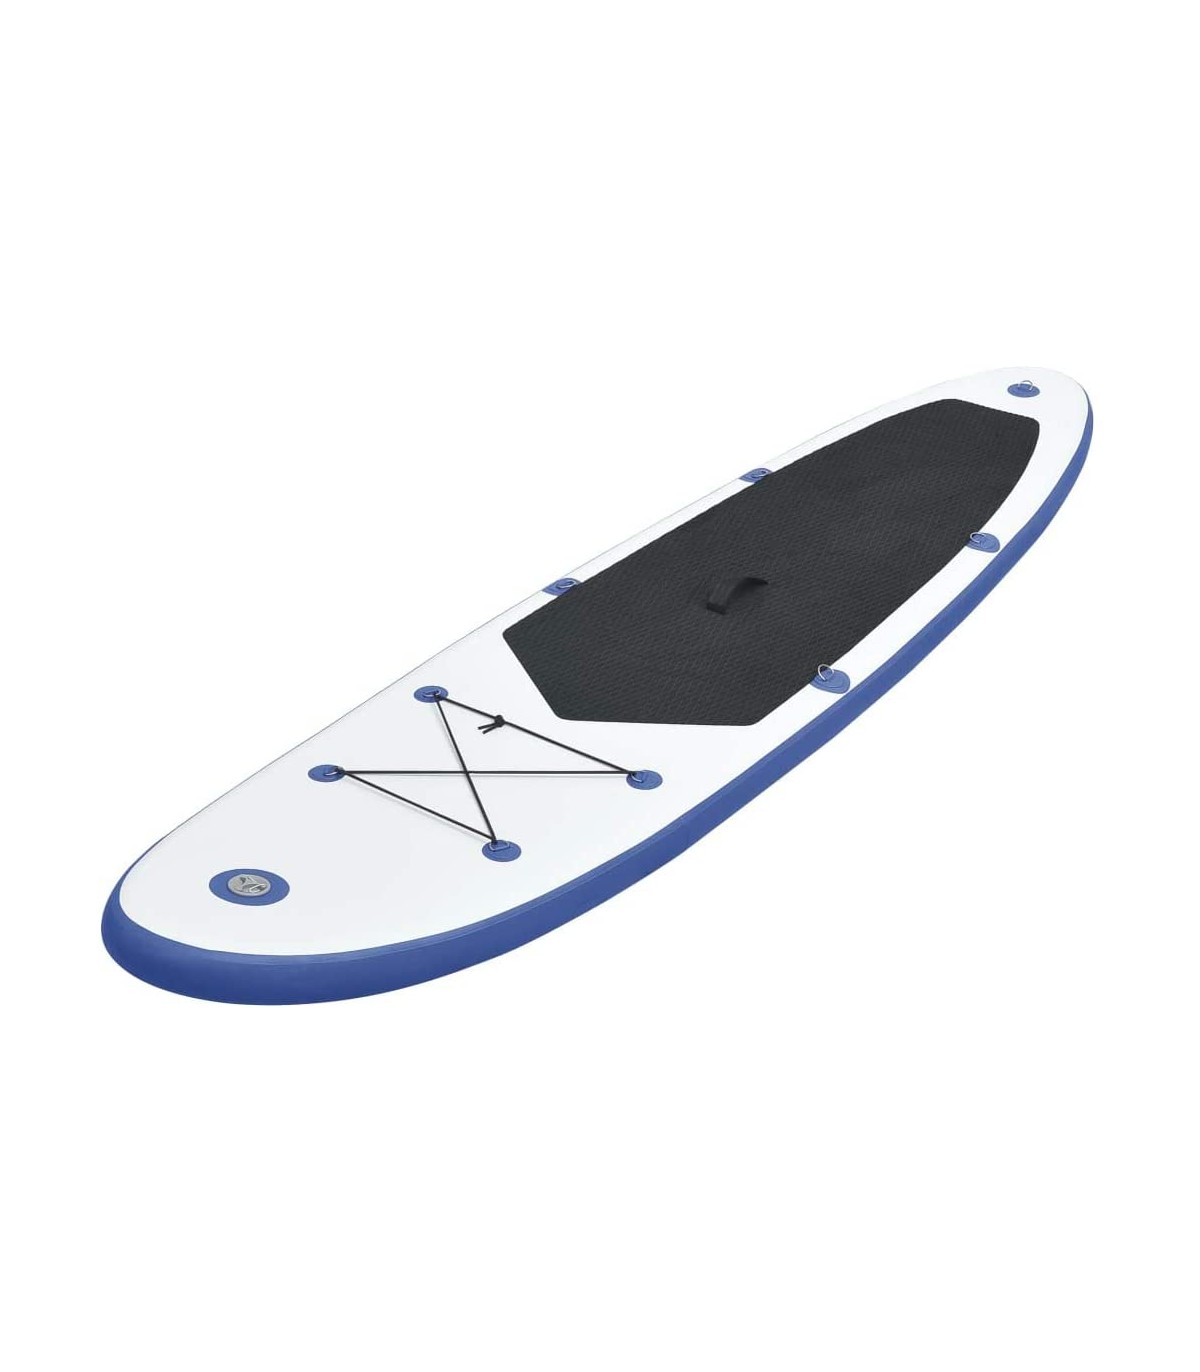 OFERTA - Tabla hinchable de Paddle surf 10'6 + asiento kayak Baltimore